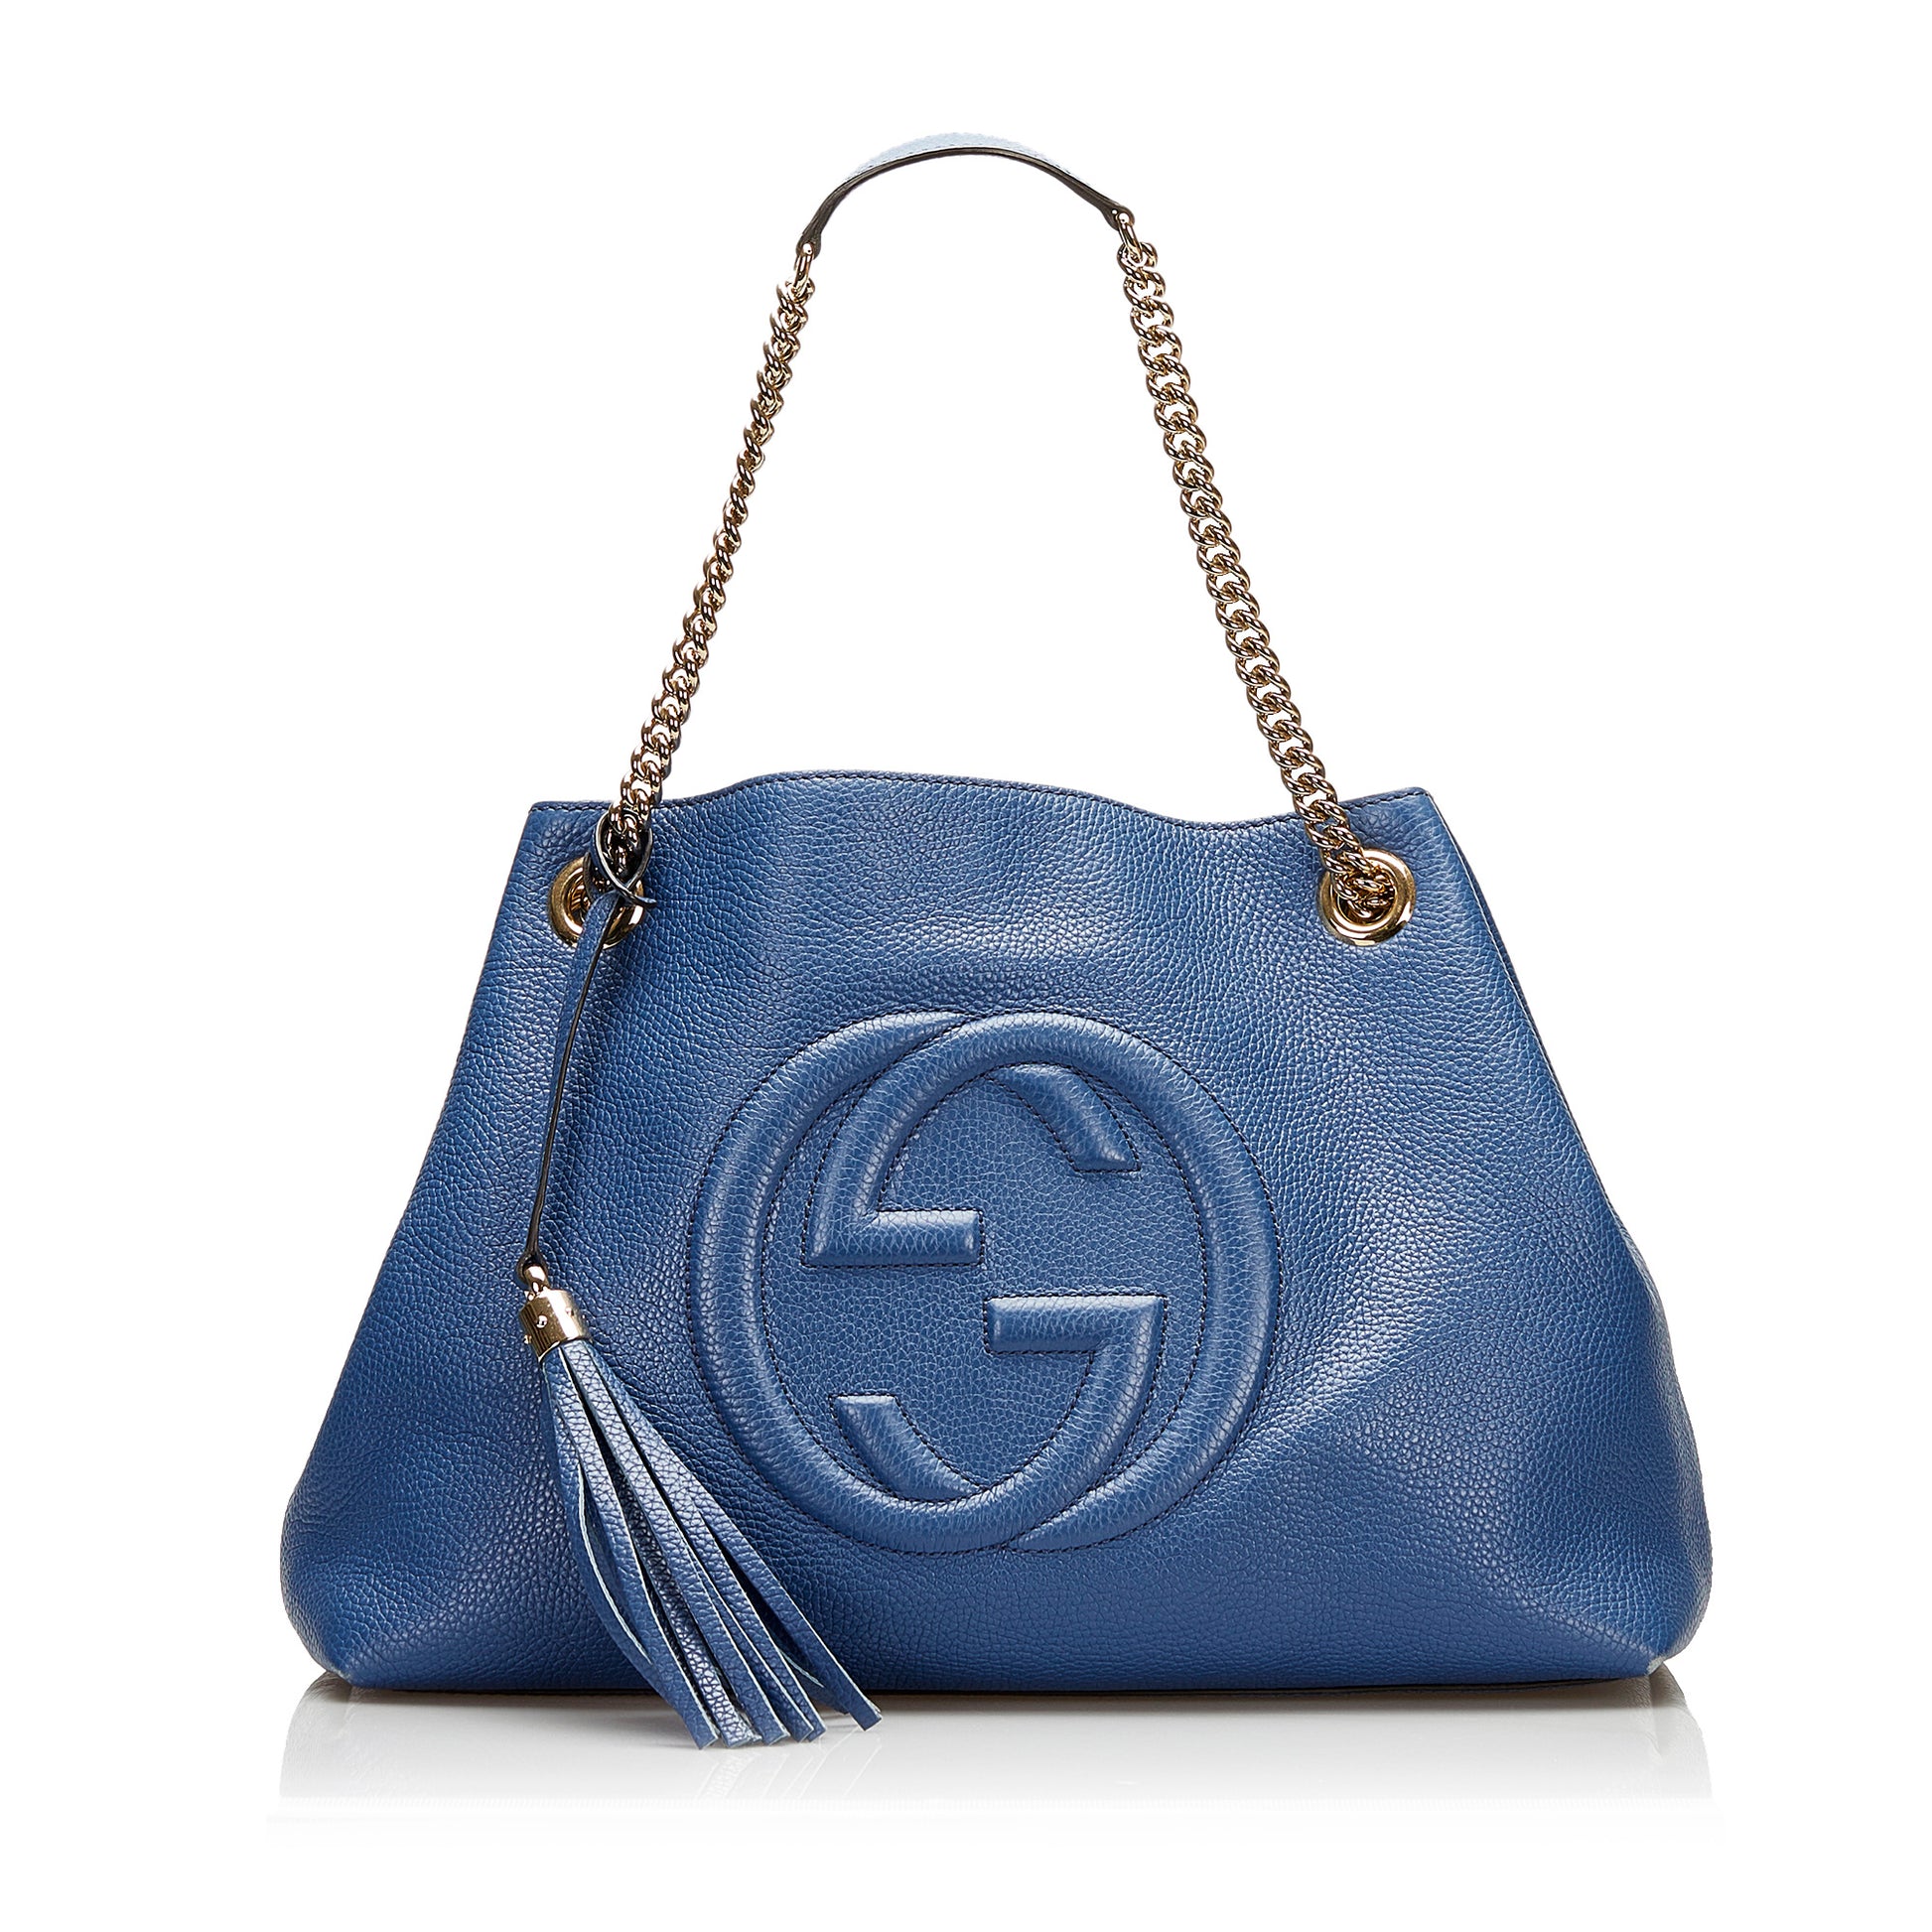 *ON SALE* GUCCI #36715 Soho Turquoise Leather Shoulder Bag, 54% OFF